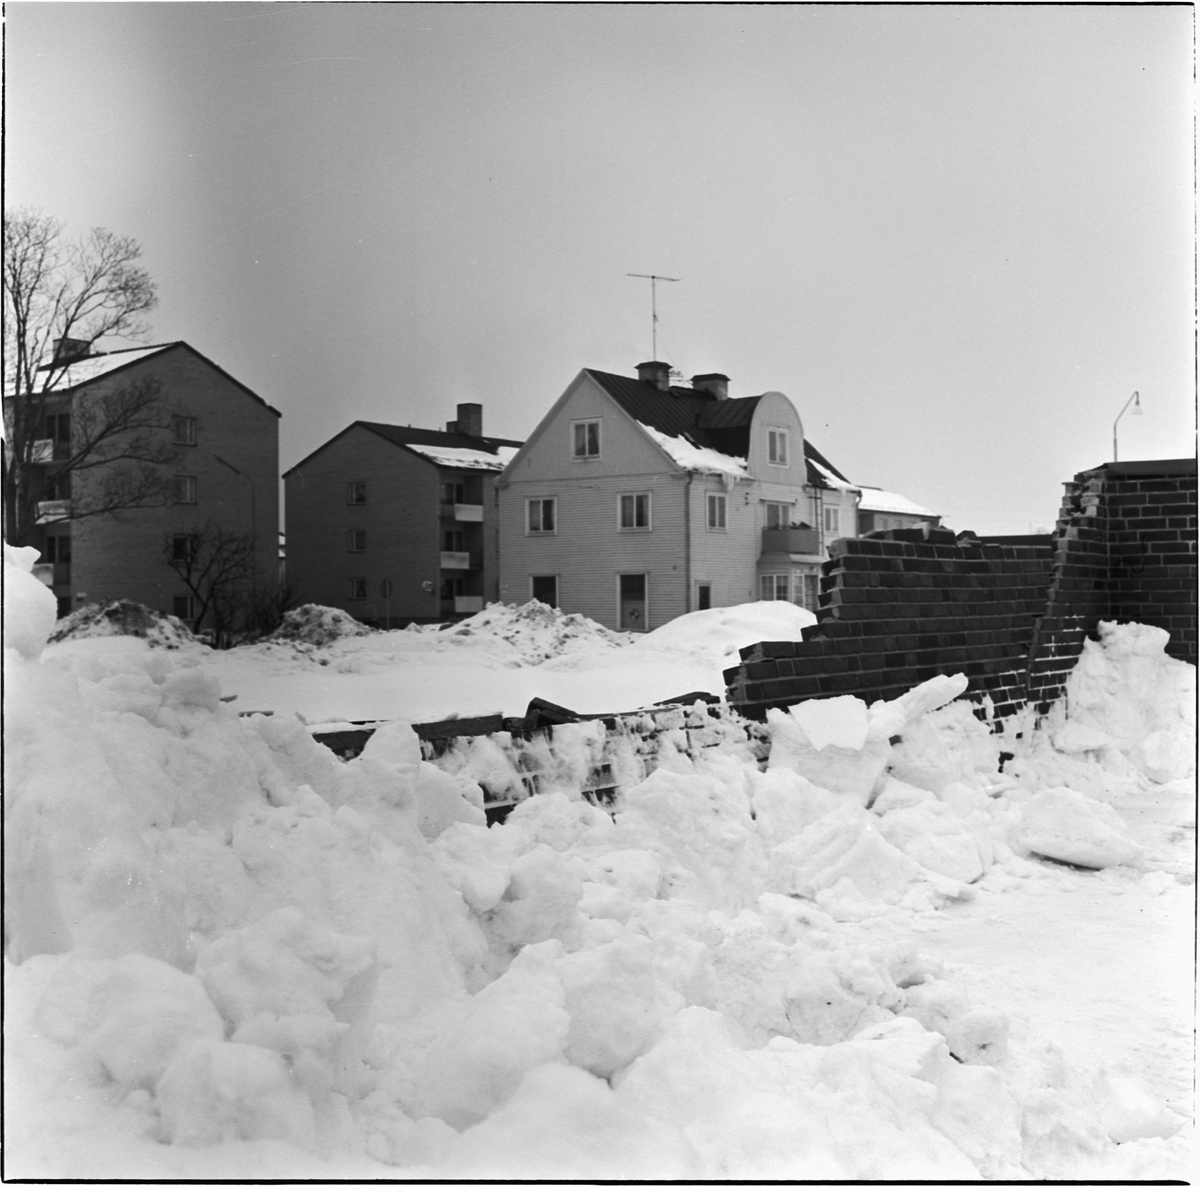 Polismur rasade i Tierp, Uppland 1970